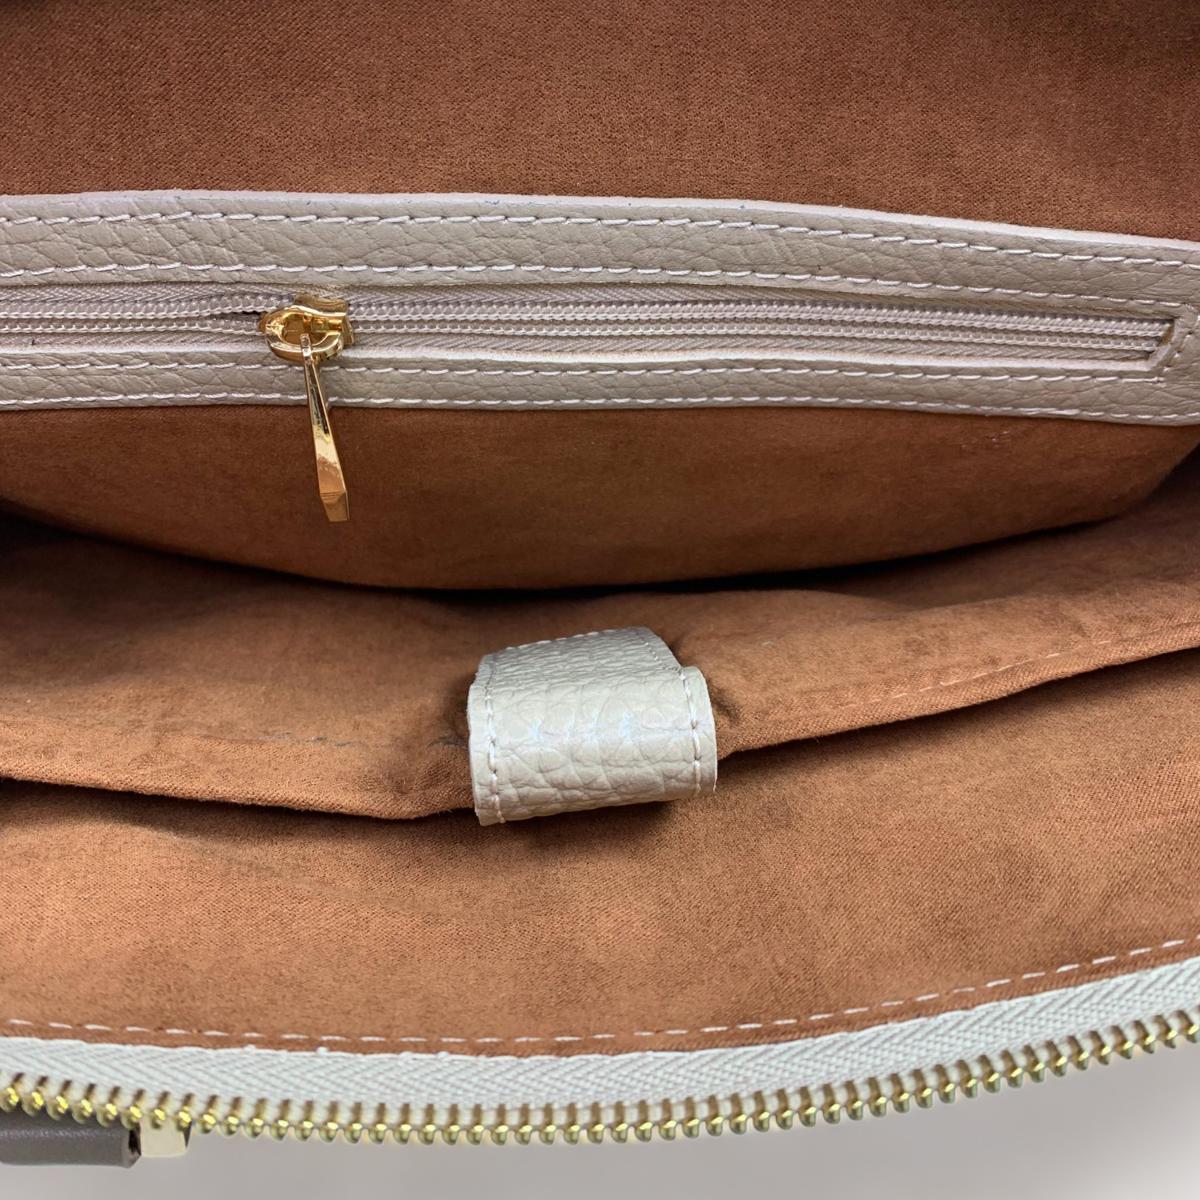 LeatherLuxe - Cream Leather Unisex Bag; Laptop Bag; Large Bag Genuine leather Designer Premium leather bag for women leather hobo tote messenger bag Leather Accessories Leather Shop Leather Goods